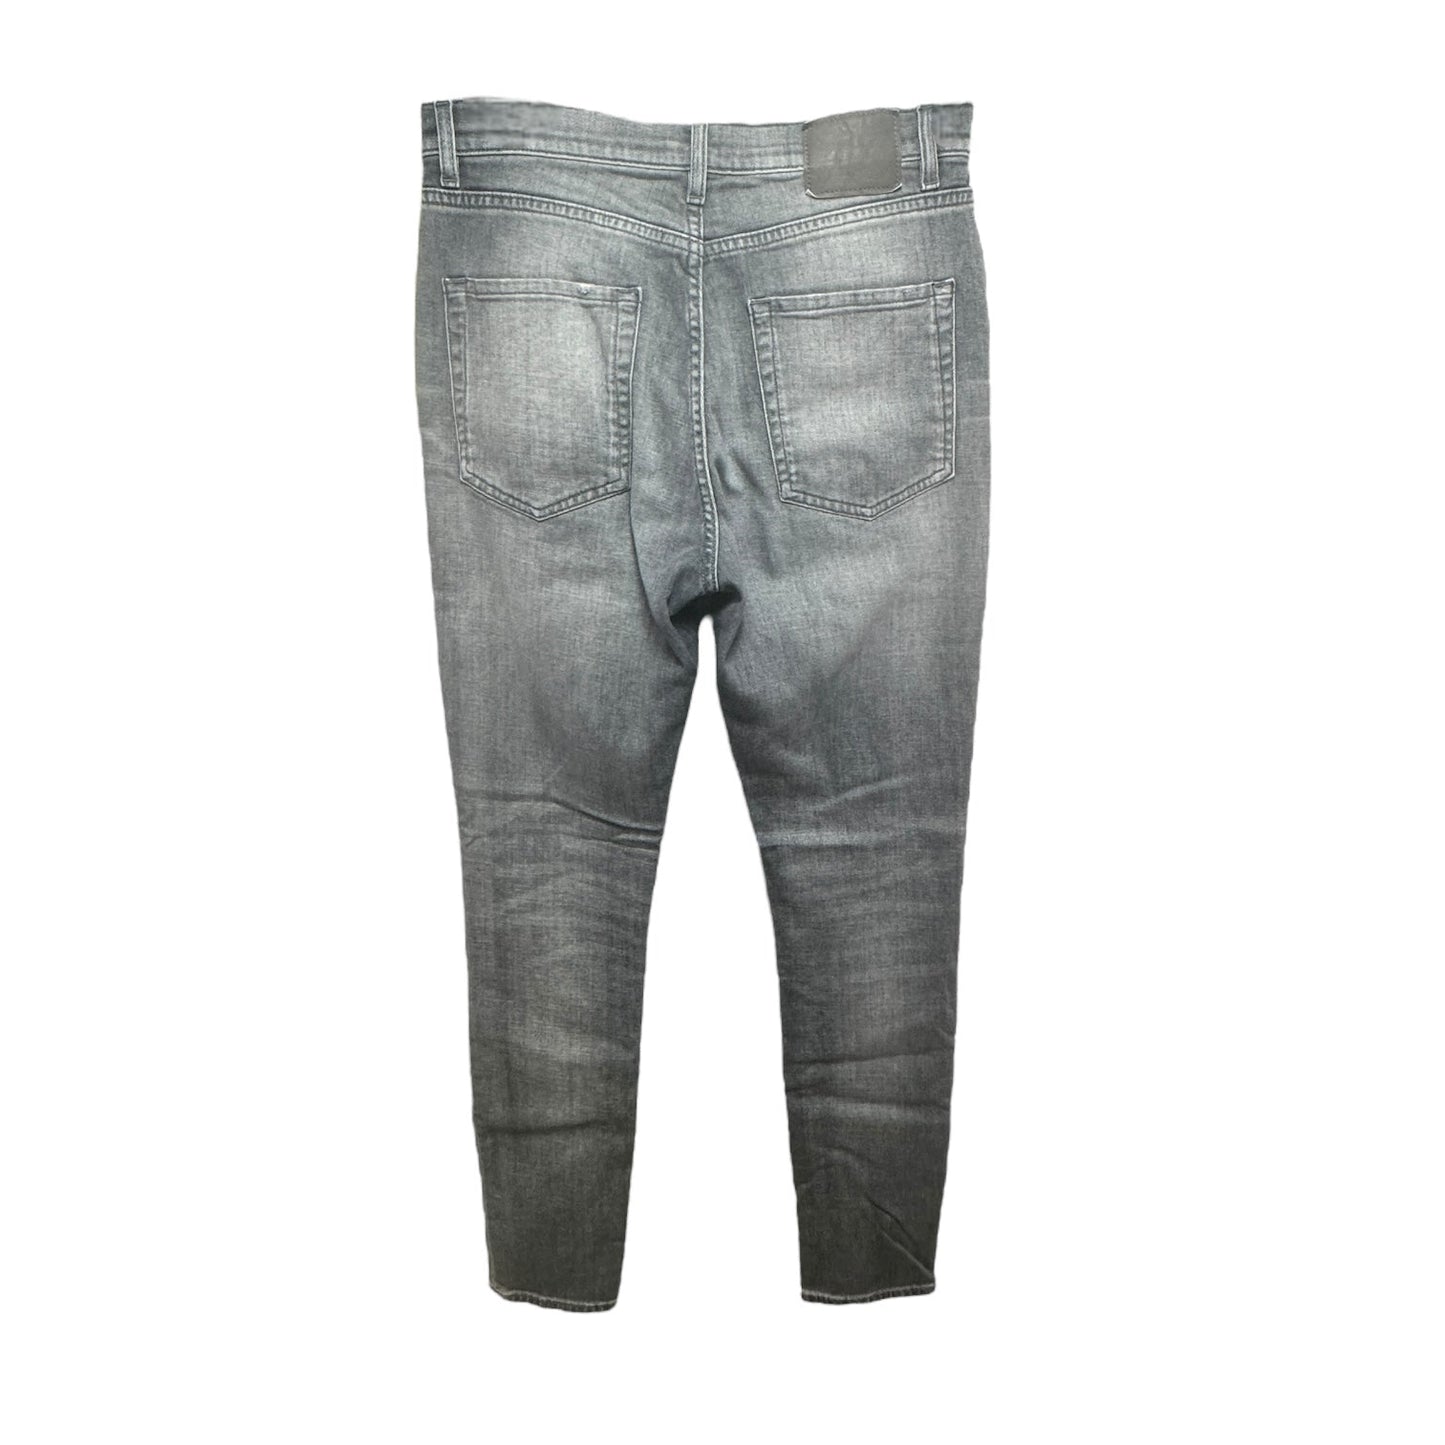 Mini Skinny Jeans in Washed Grey Designer 6397, Size 8/29